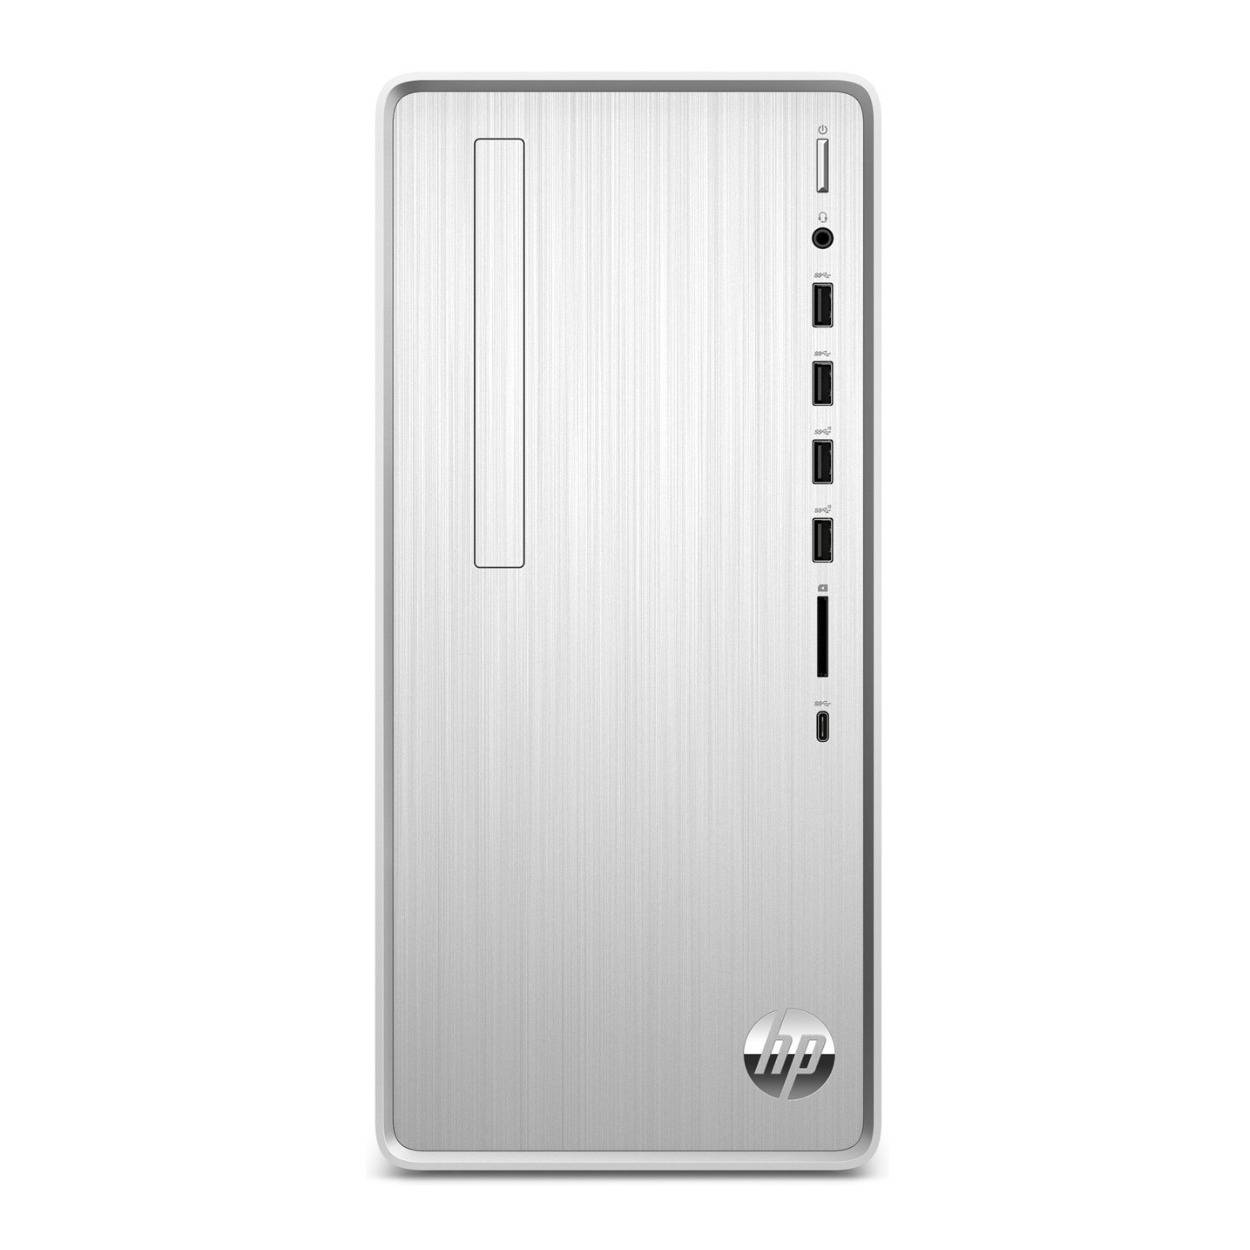 HP Pavilion TP01 Intel Core i5-9400 6-Core 8GB 1TB HDD 256GB SSD Desktop PC